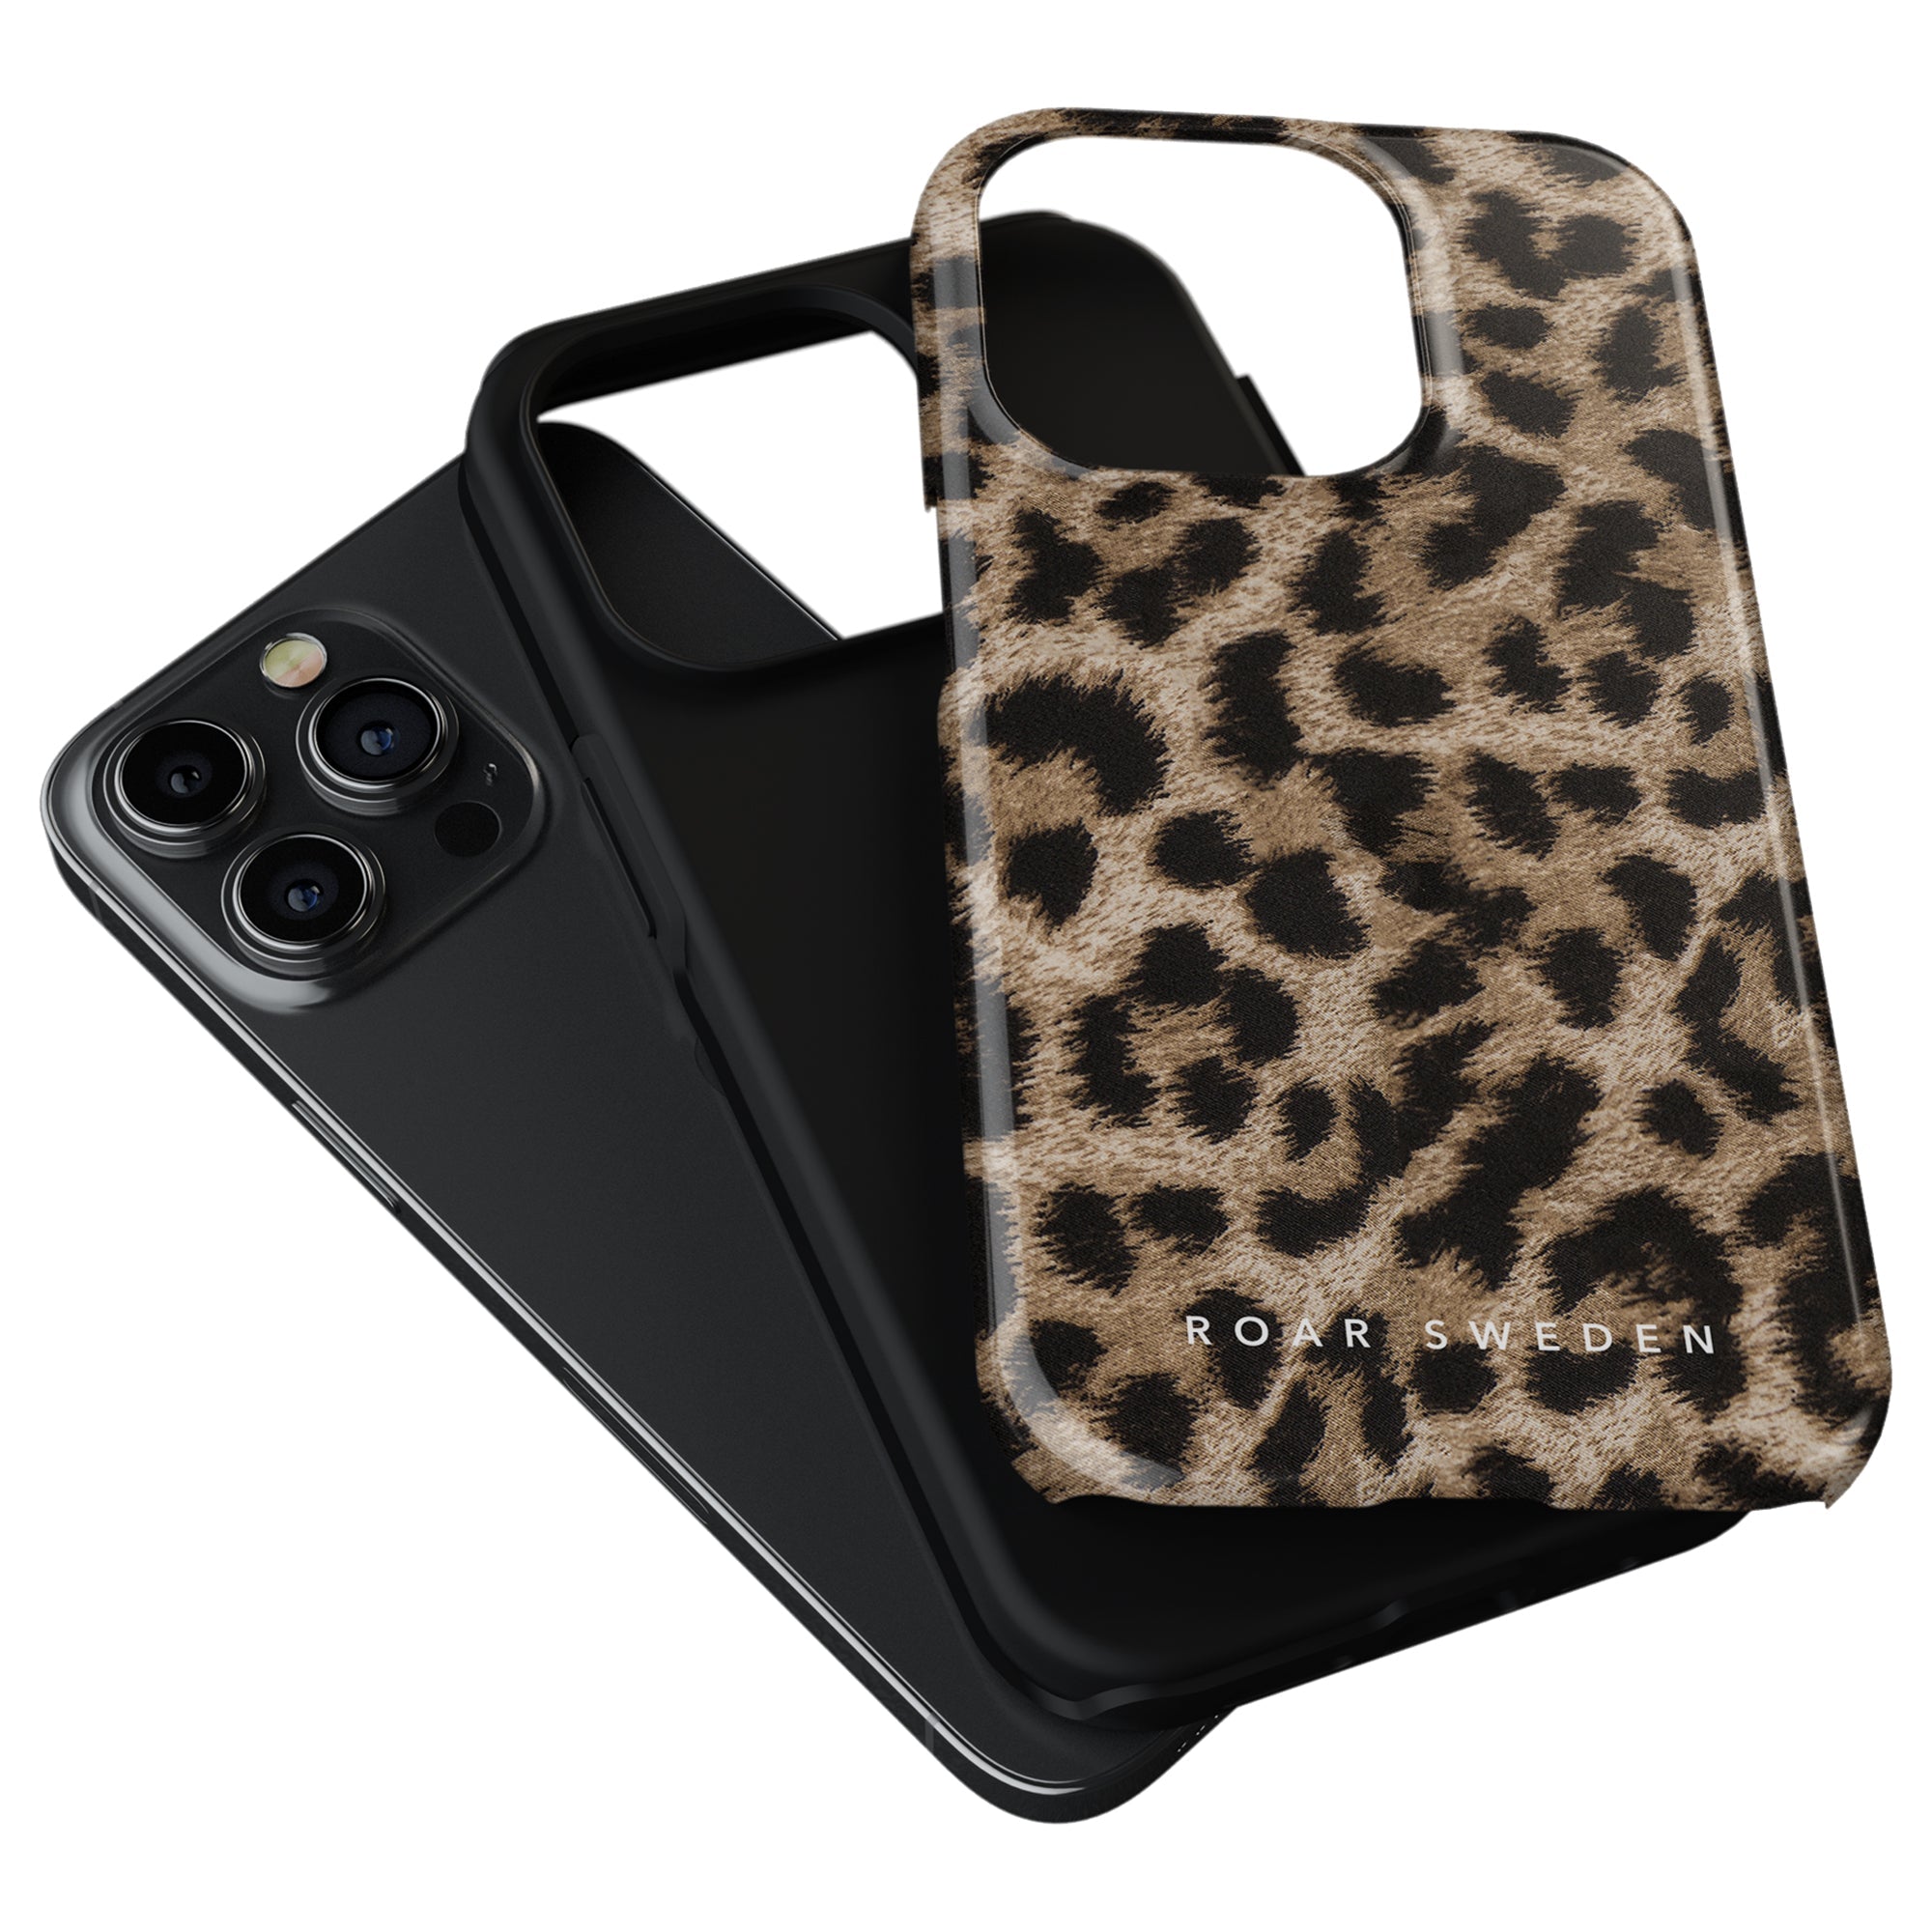 A Leopard - Tufft fodral för iPhone 11 Pro.